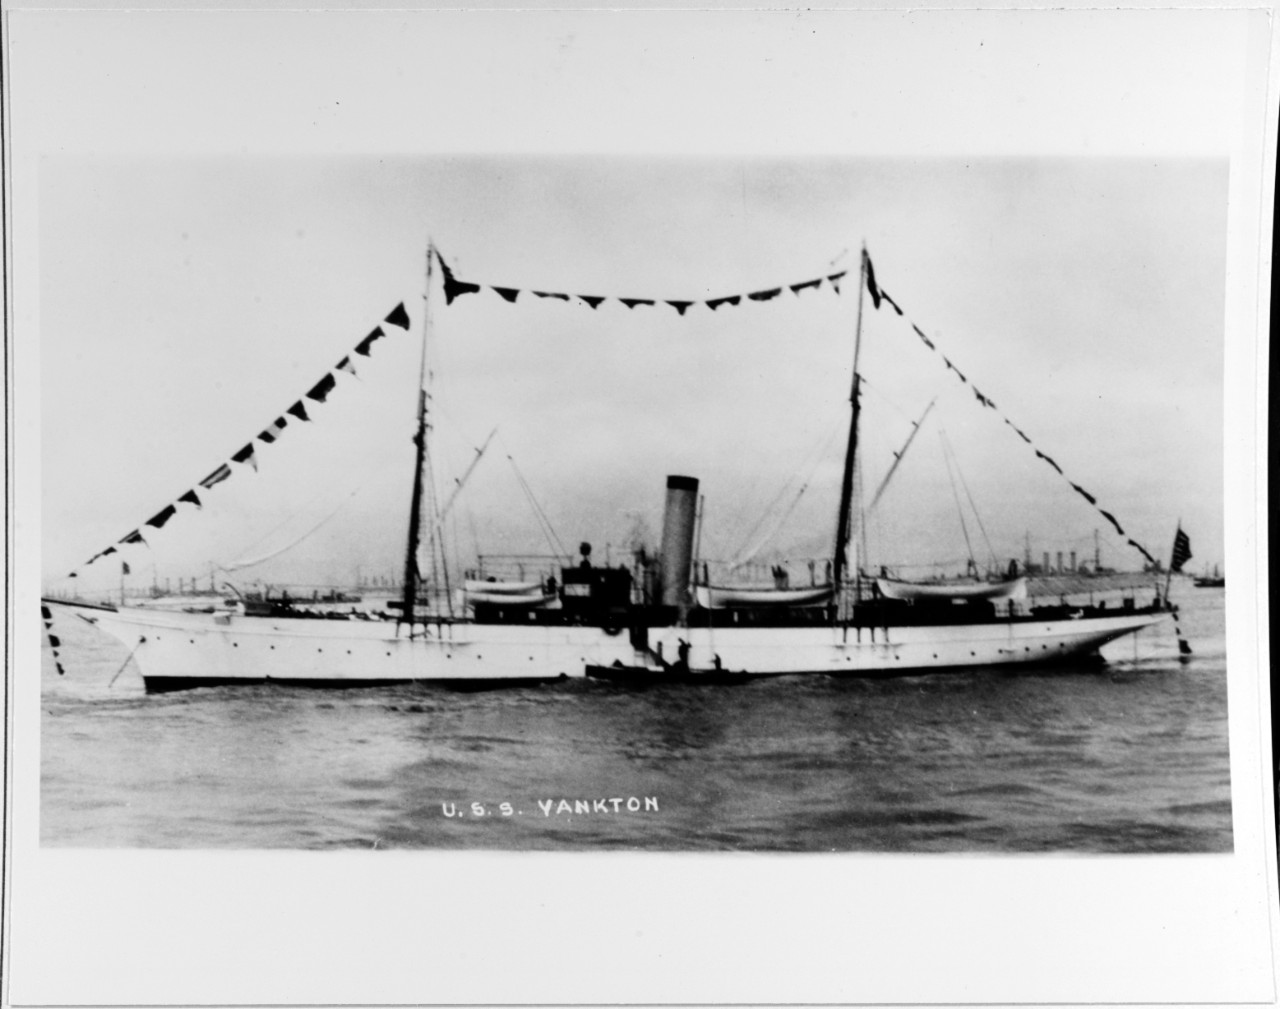 USS YANKTON (converted yacht) 1898-1921.